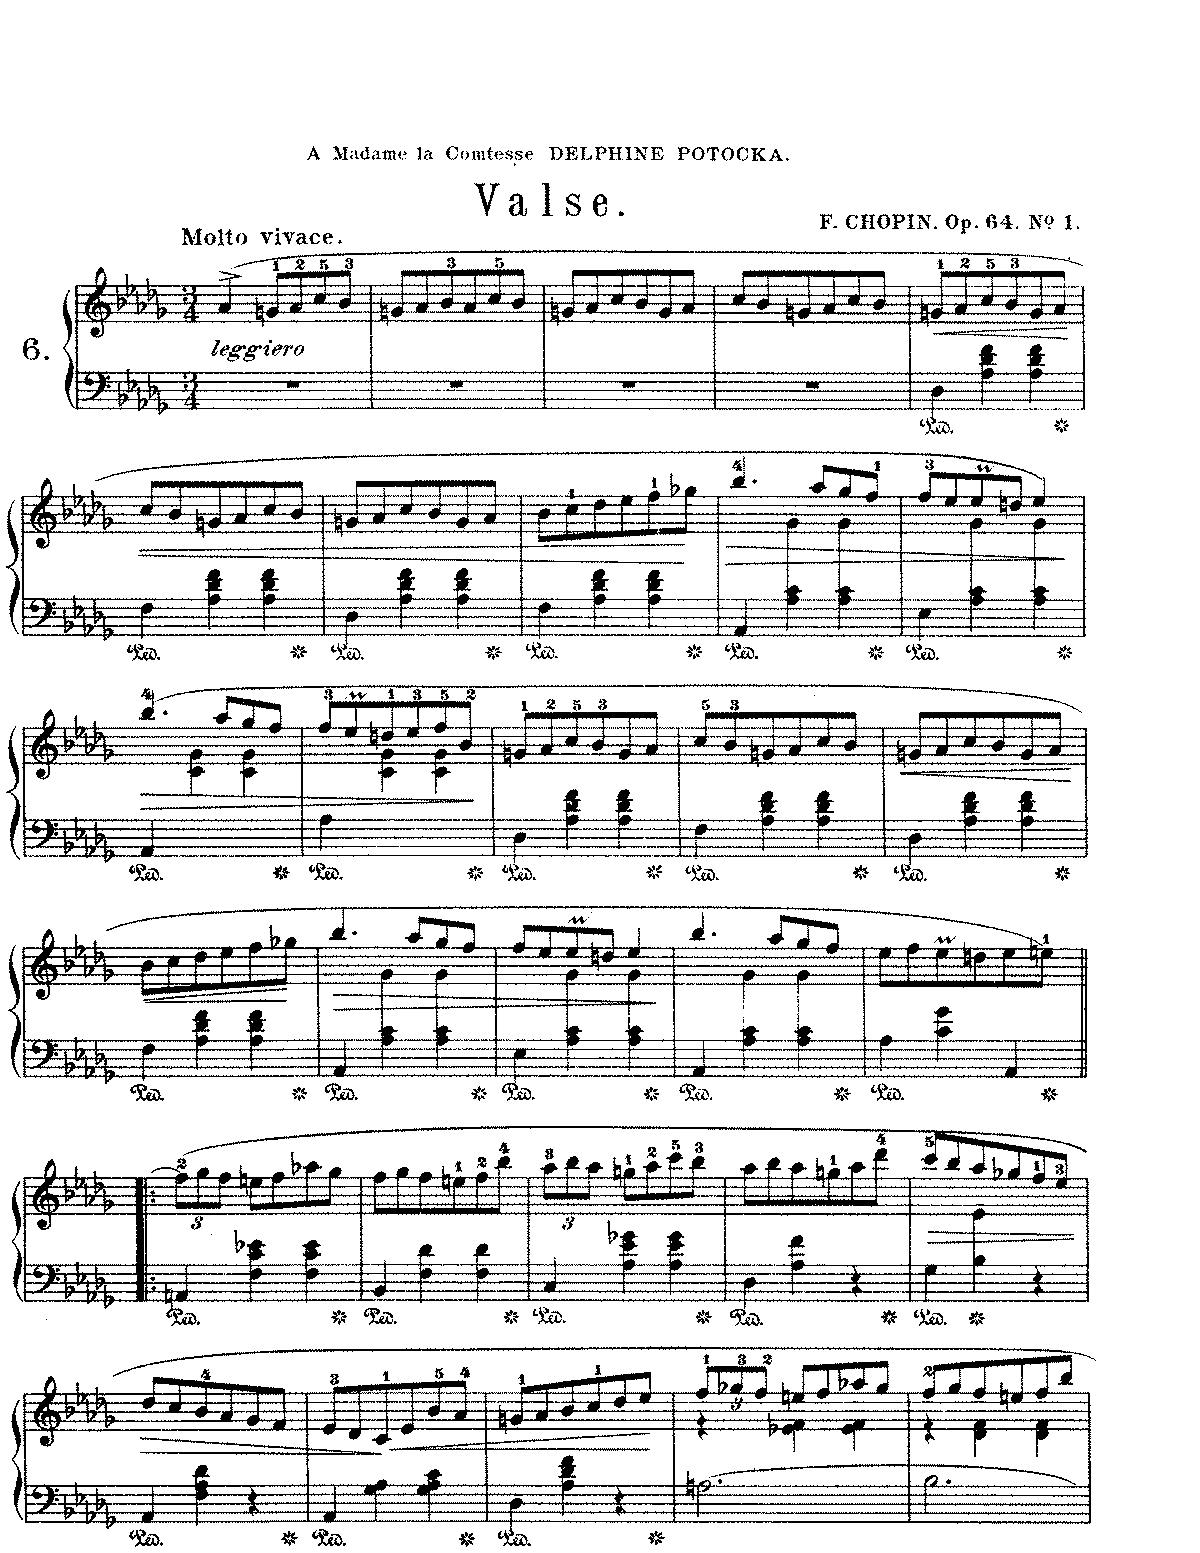 MUSIClassical notes: CHOPIN: Waltzes Op 64